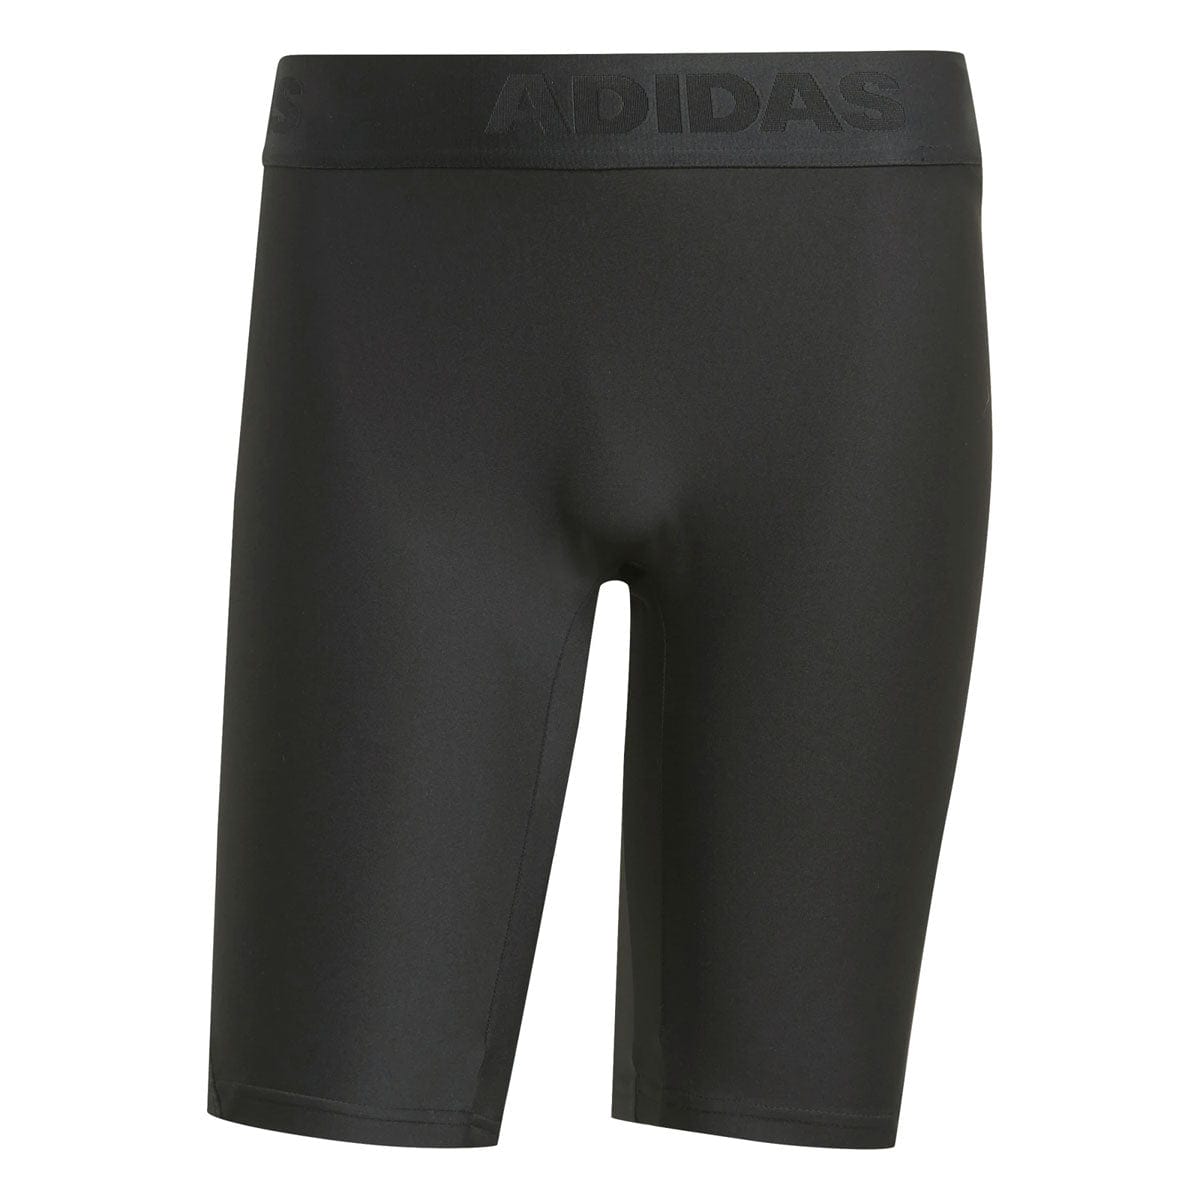 ADIDAS Mens sports M / Black ADIDAS - Primeblue 2 in 1 Shorts